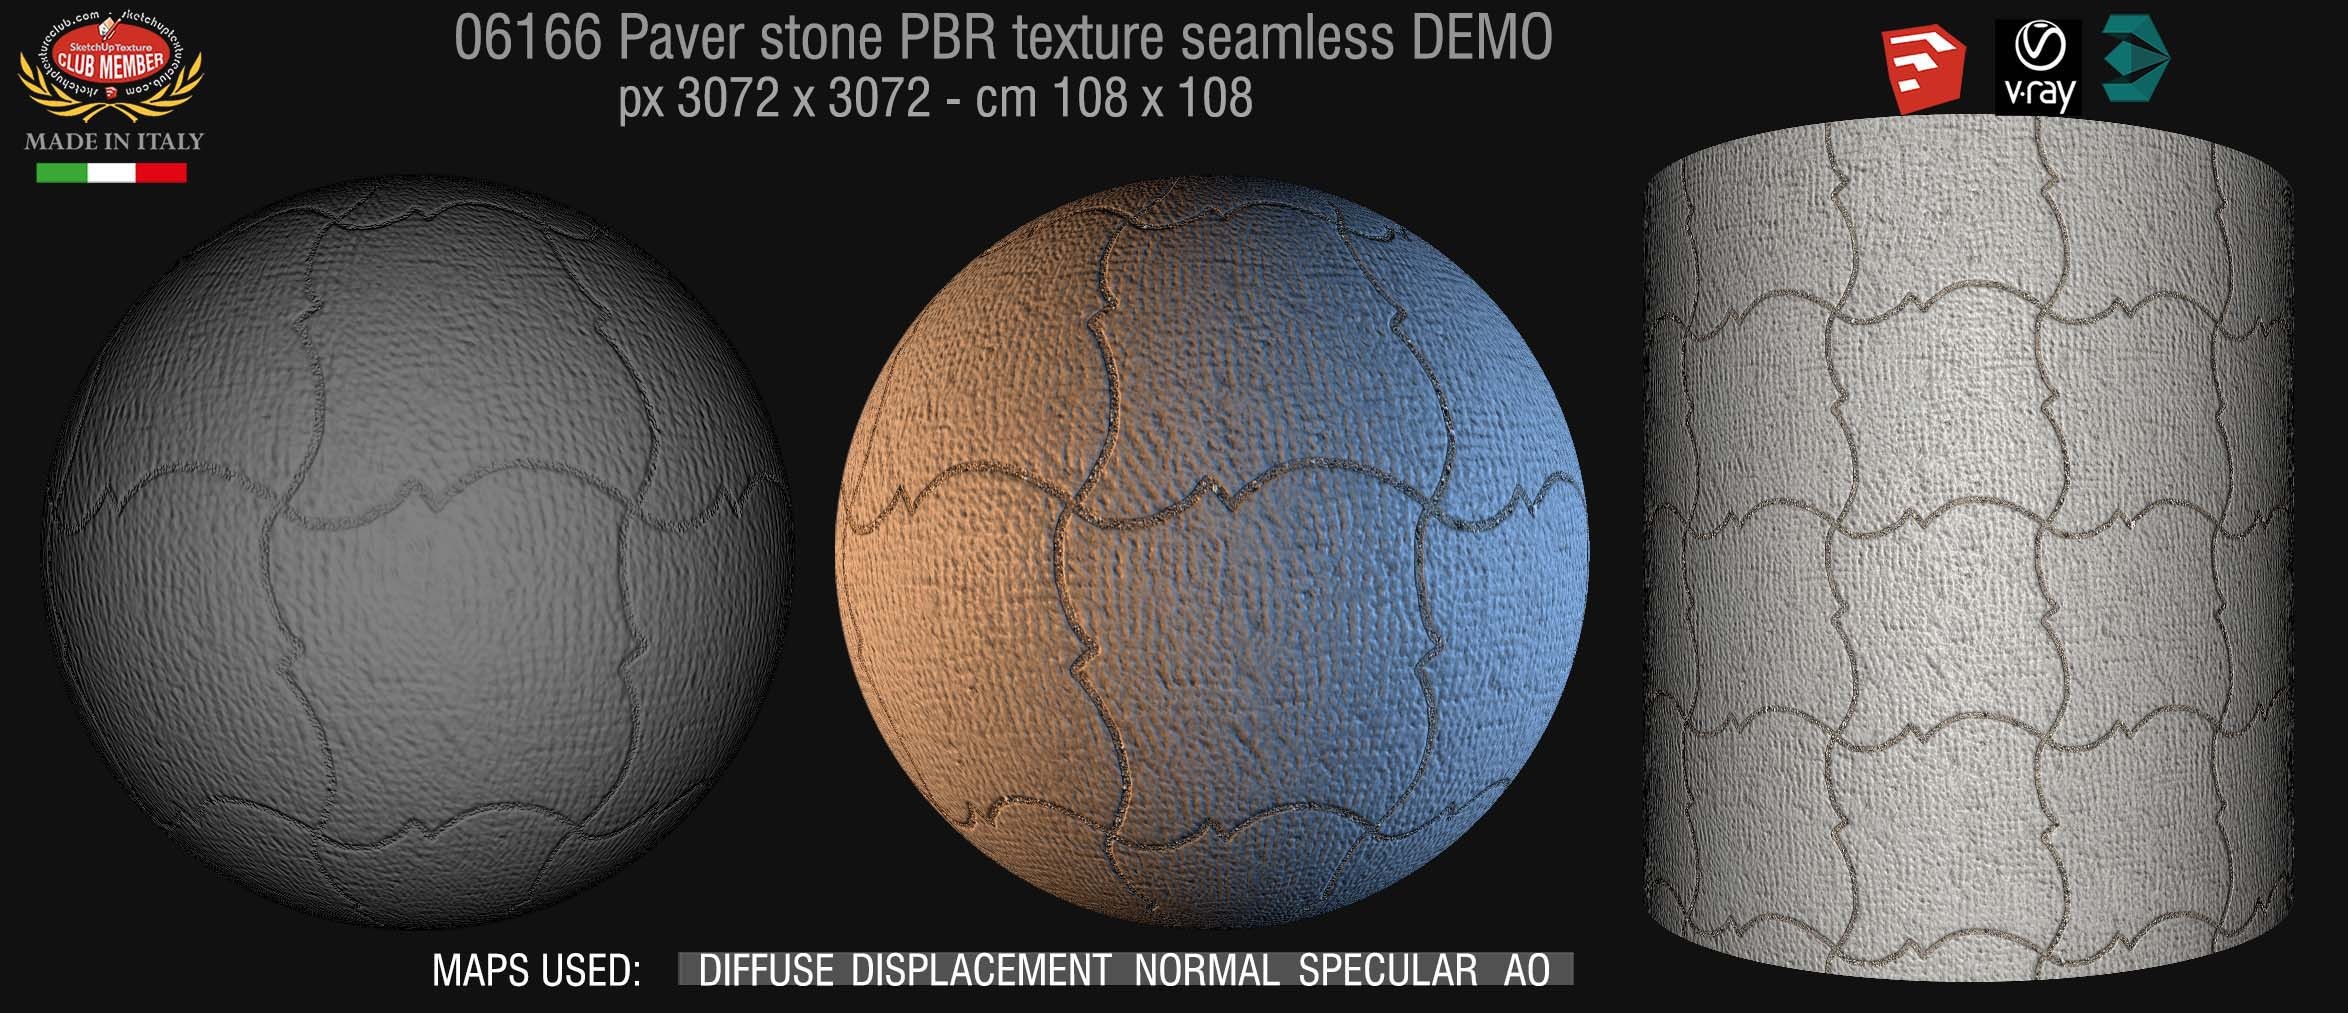 06166 paver stone PBR texture seamless DEMO